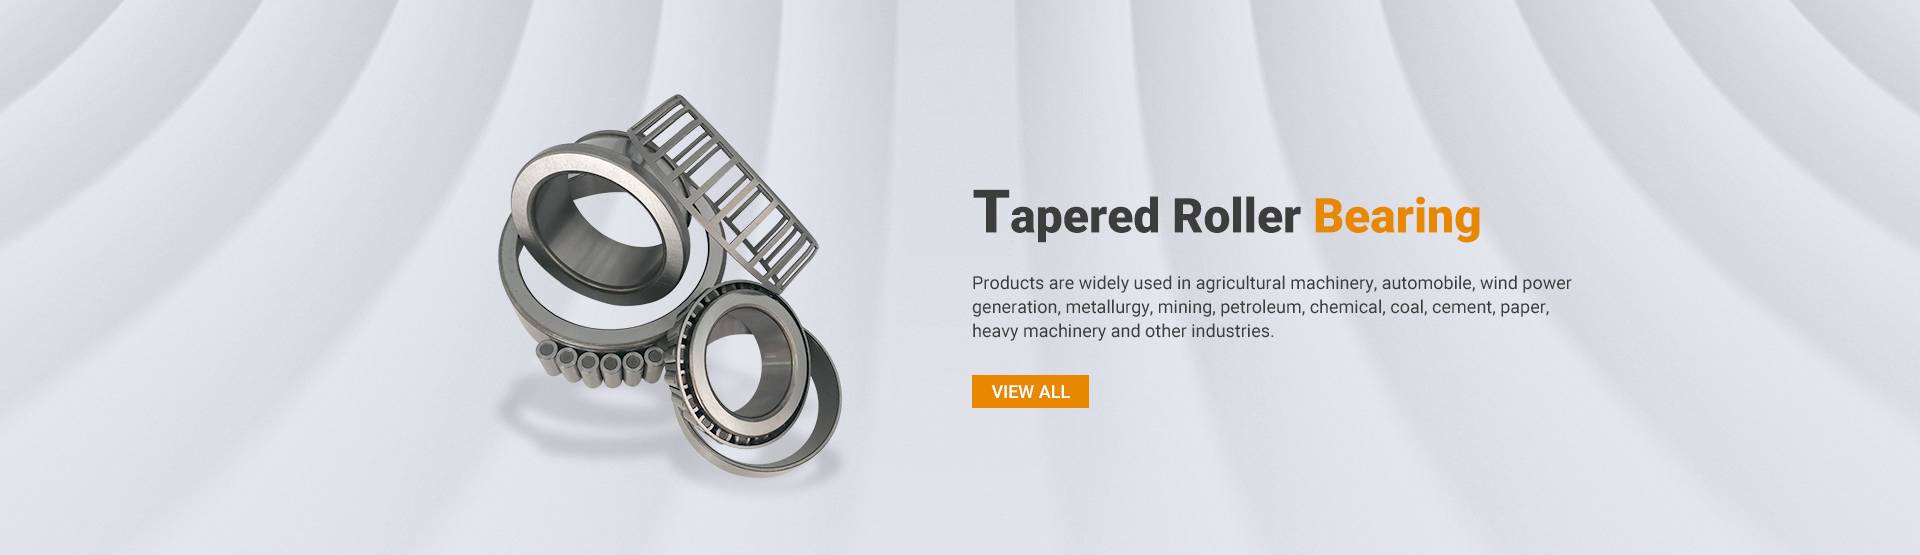 Taper Roller Bearing